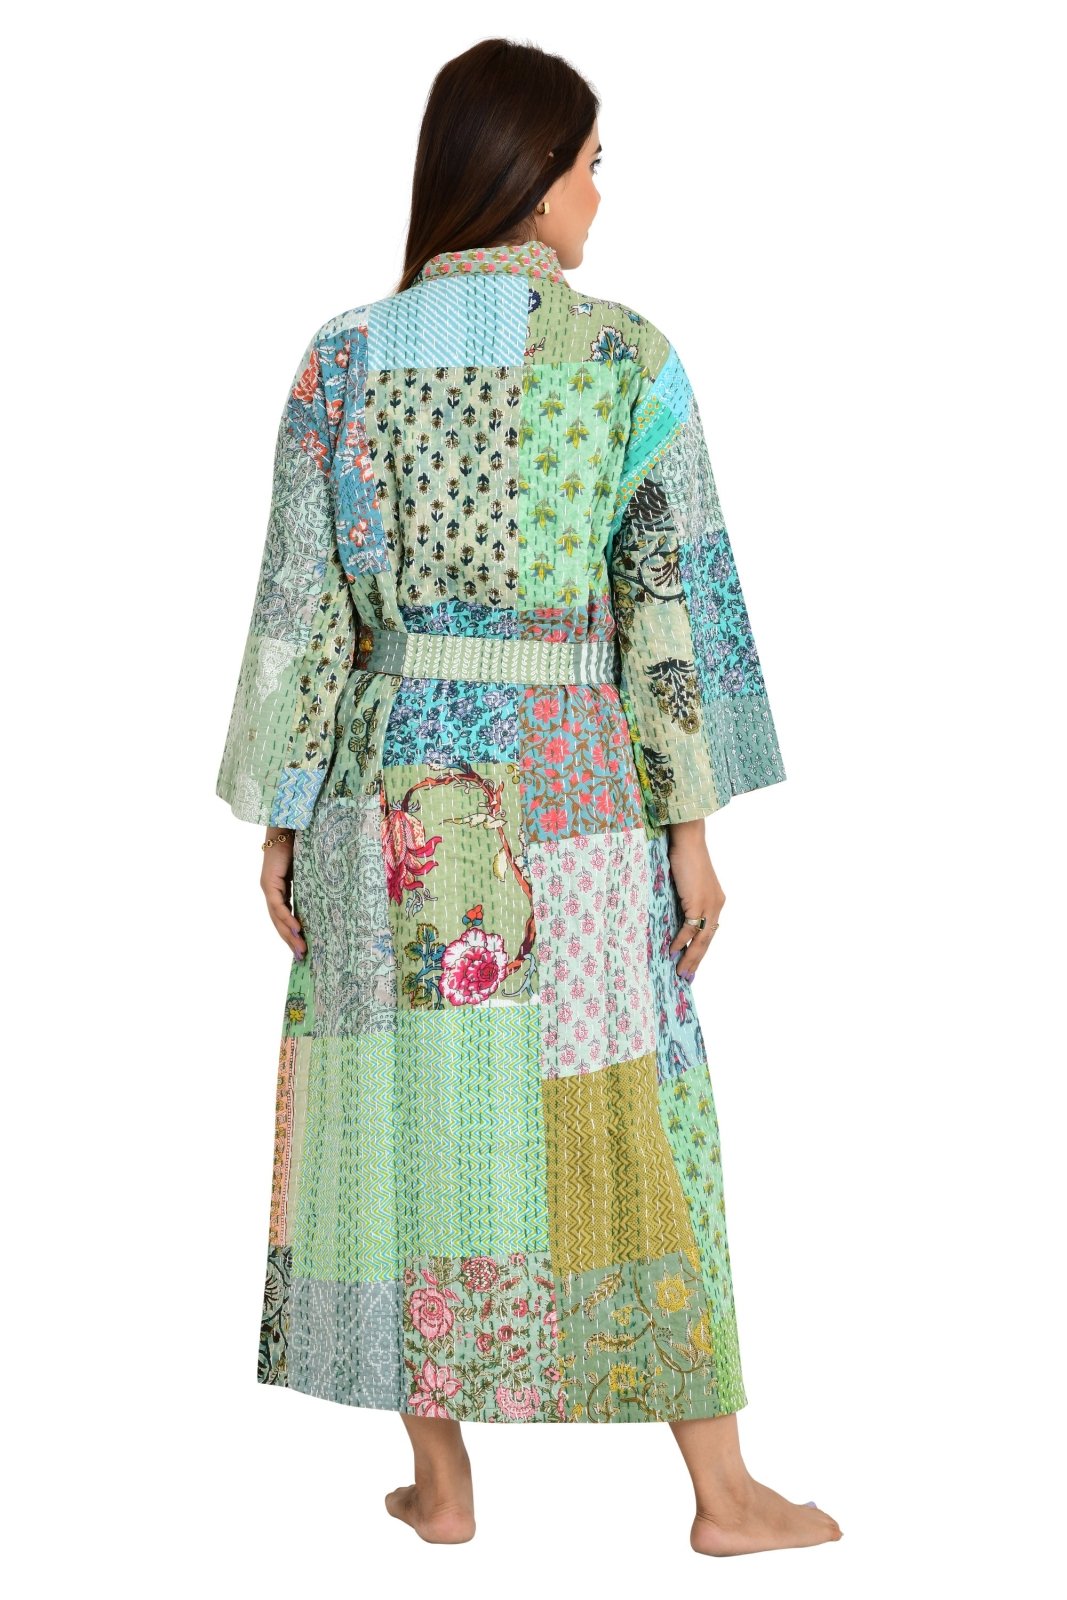 Kantha Stitch 100% Cotton Reversible Long Kimono Women Jacket | Handmade Stitch Robe | Unisex Gift | Green Tone Patchwork Print - The Eastern Loom